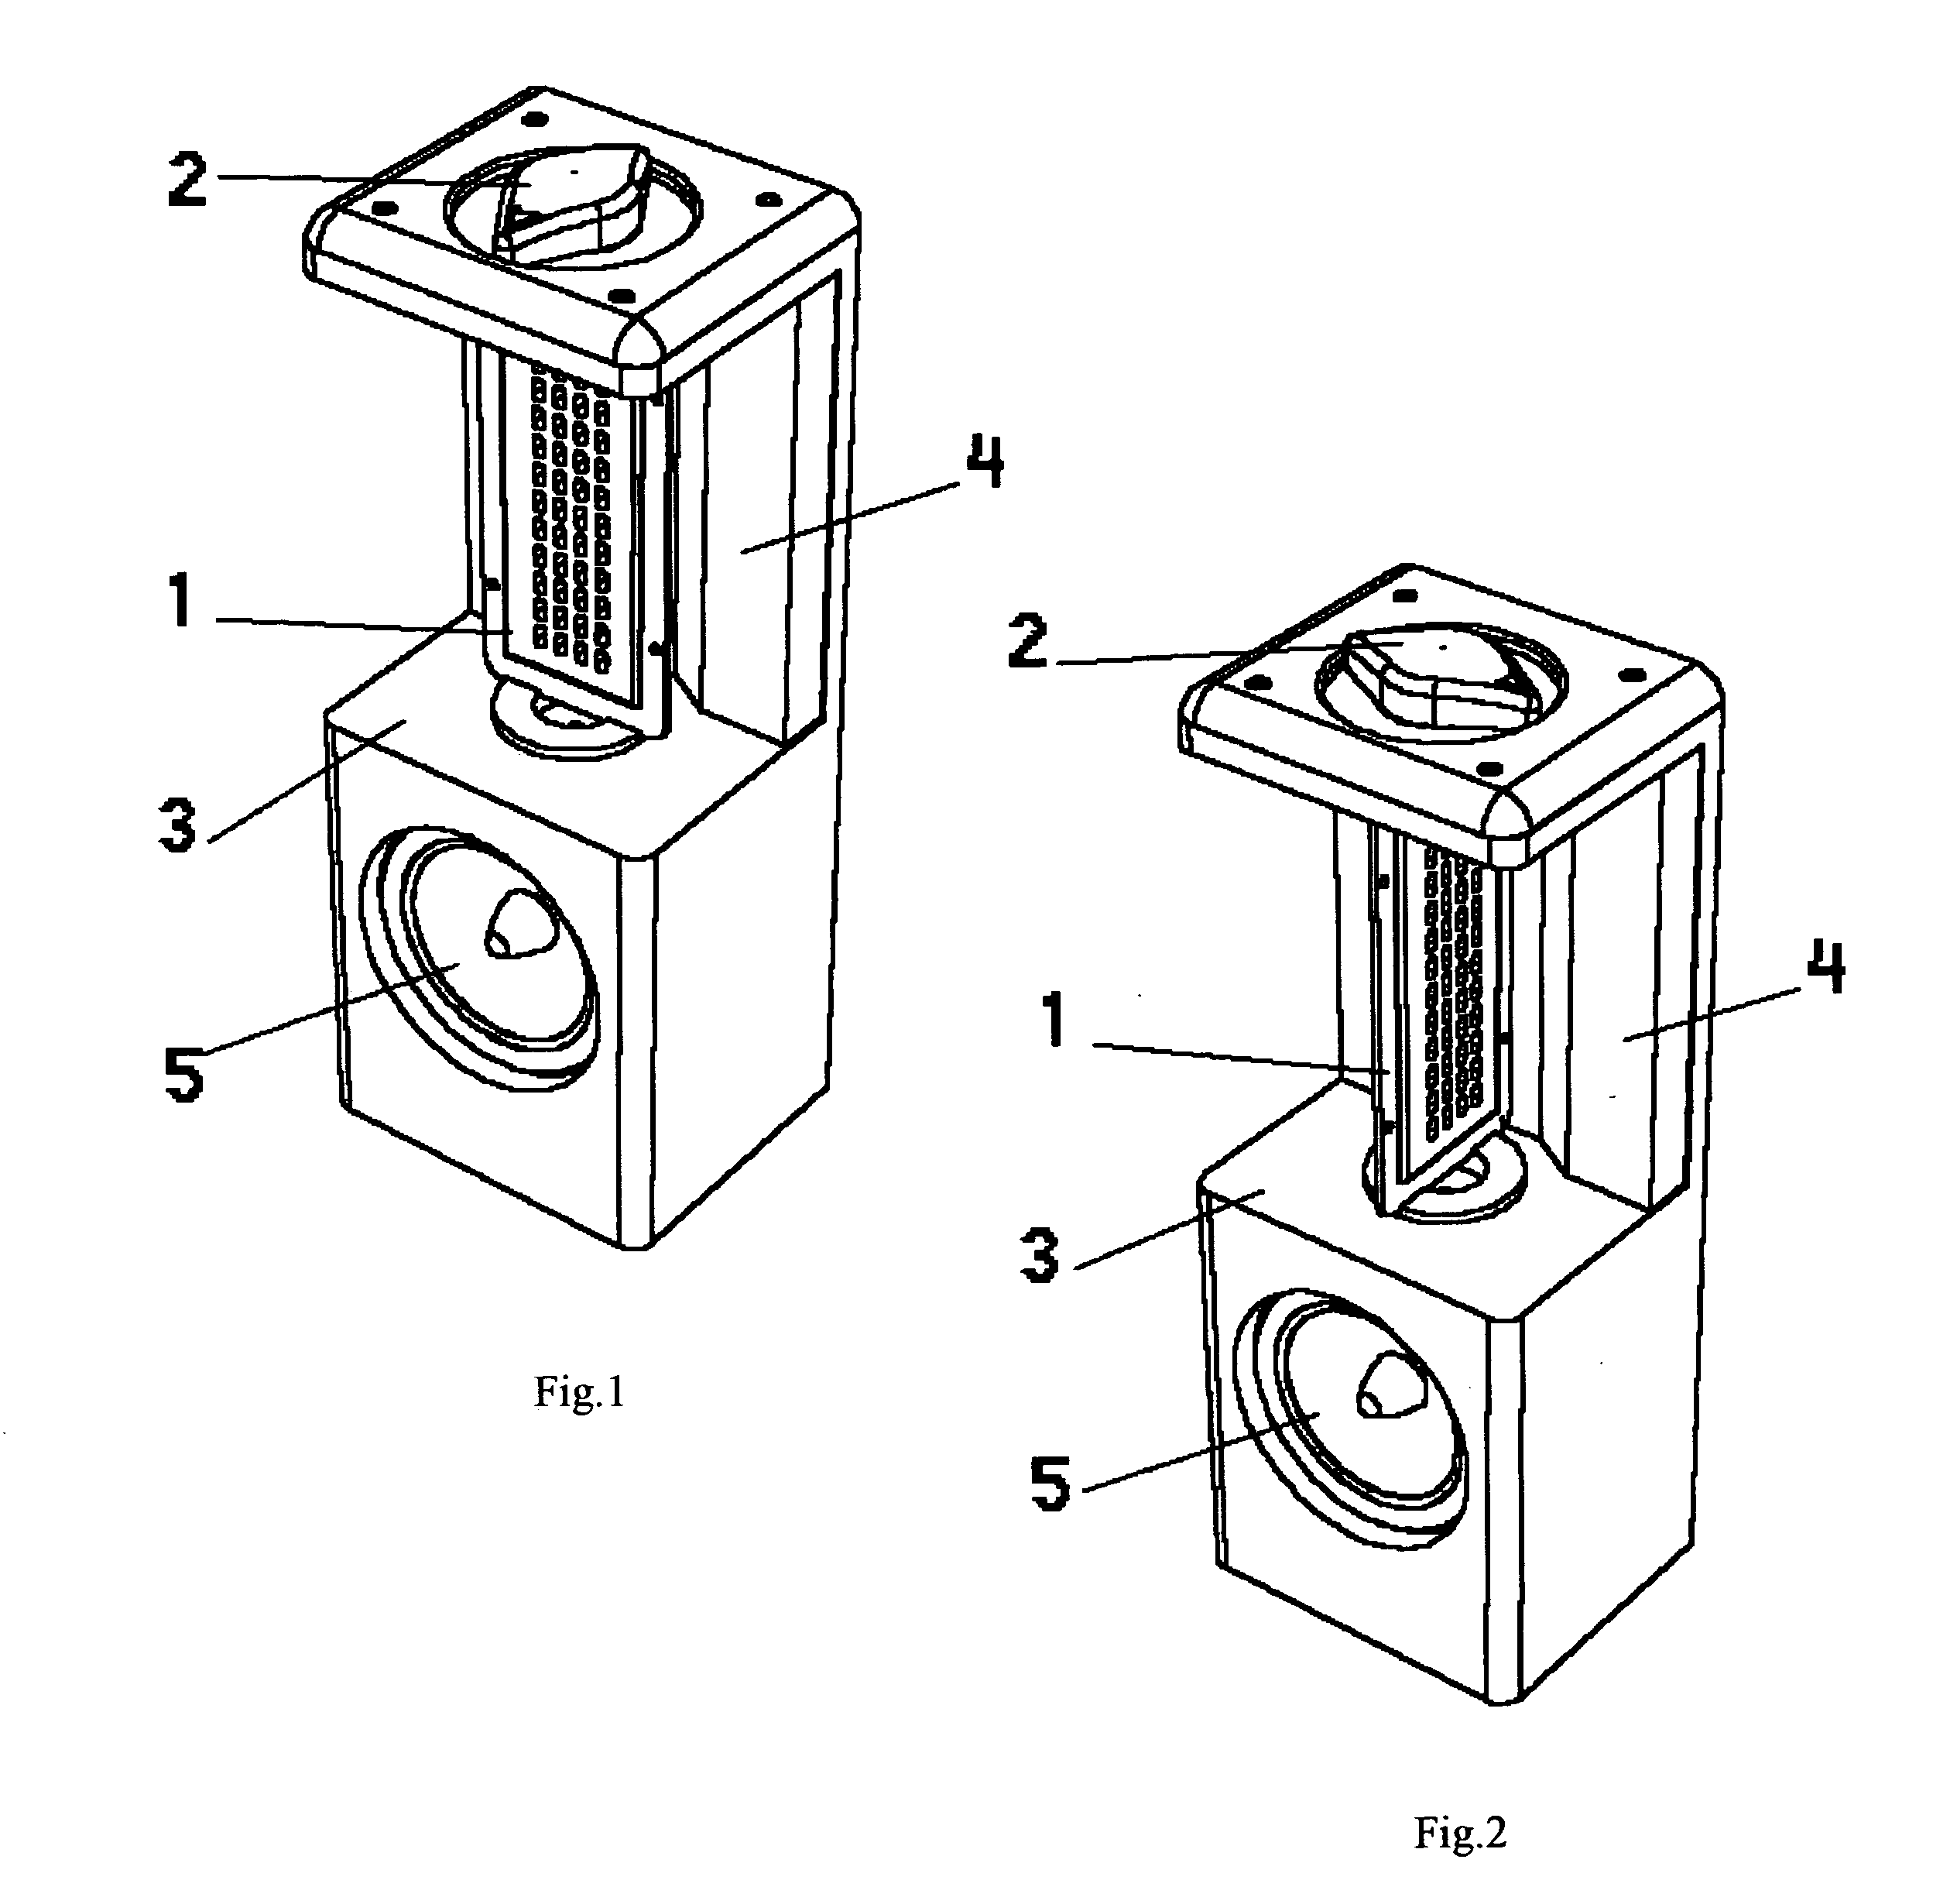 Loudspeaker with variable radiation pattern